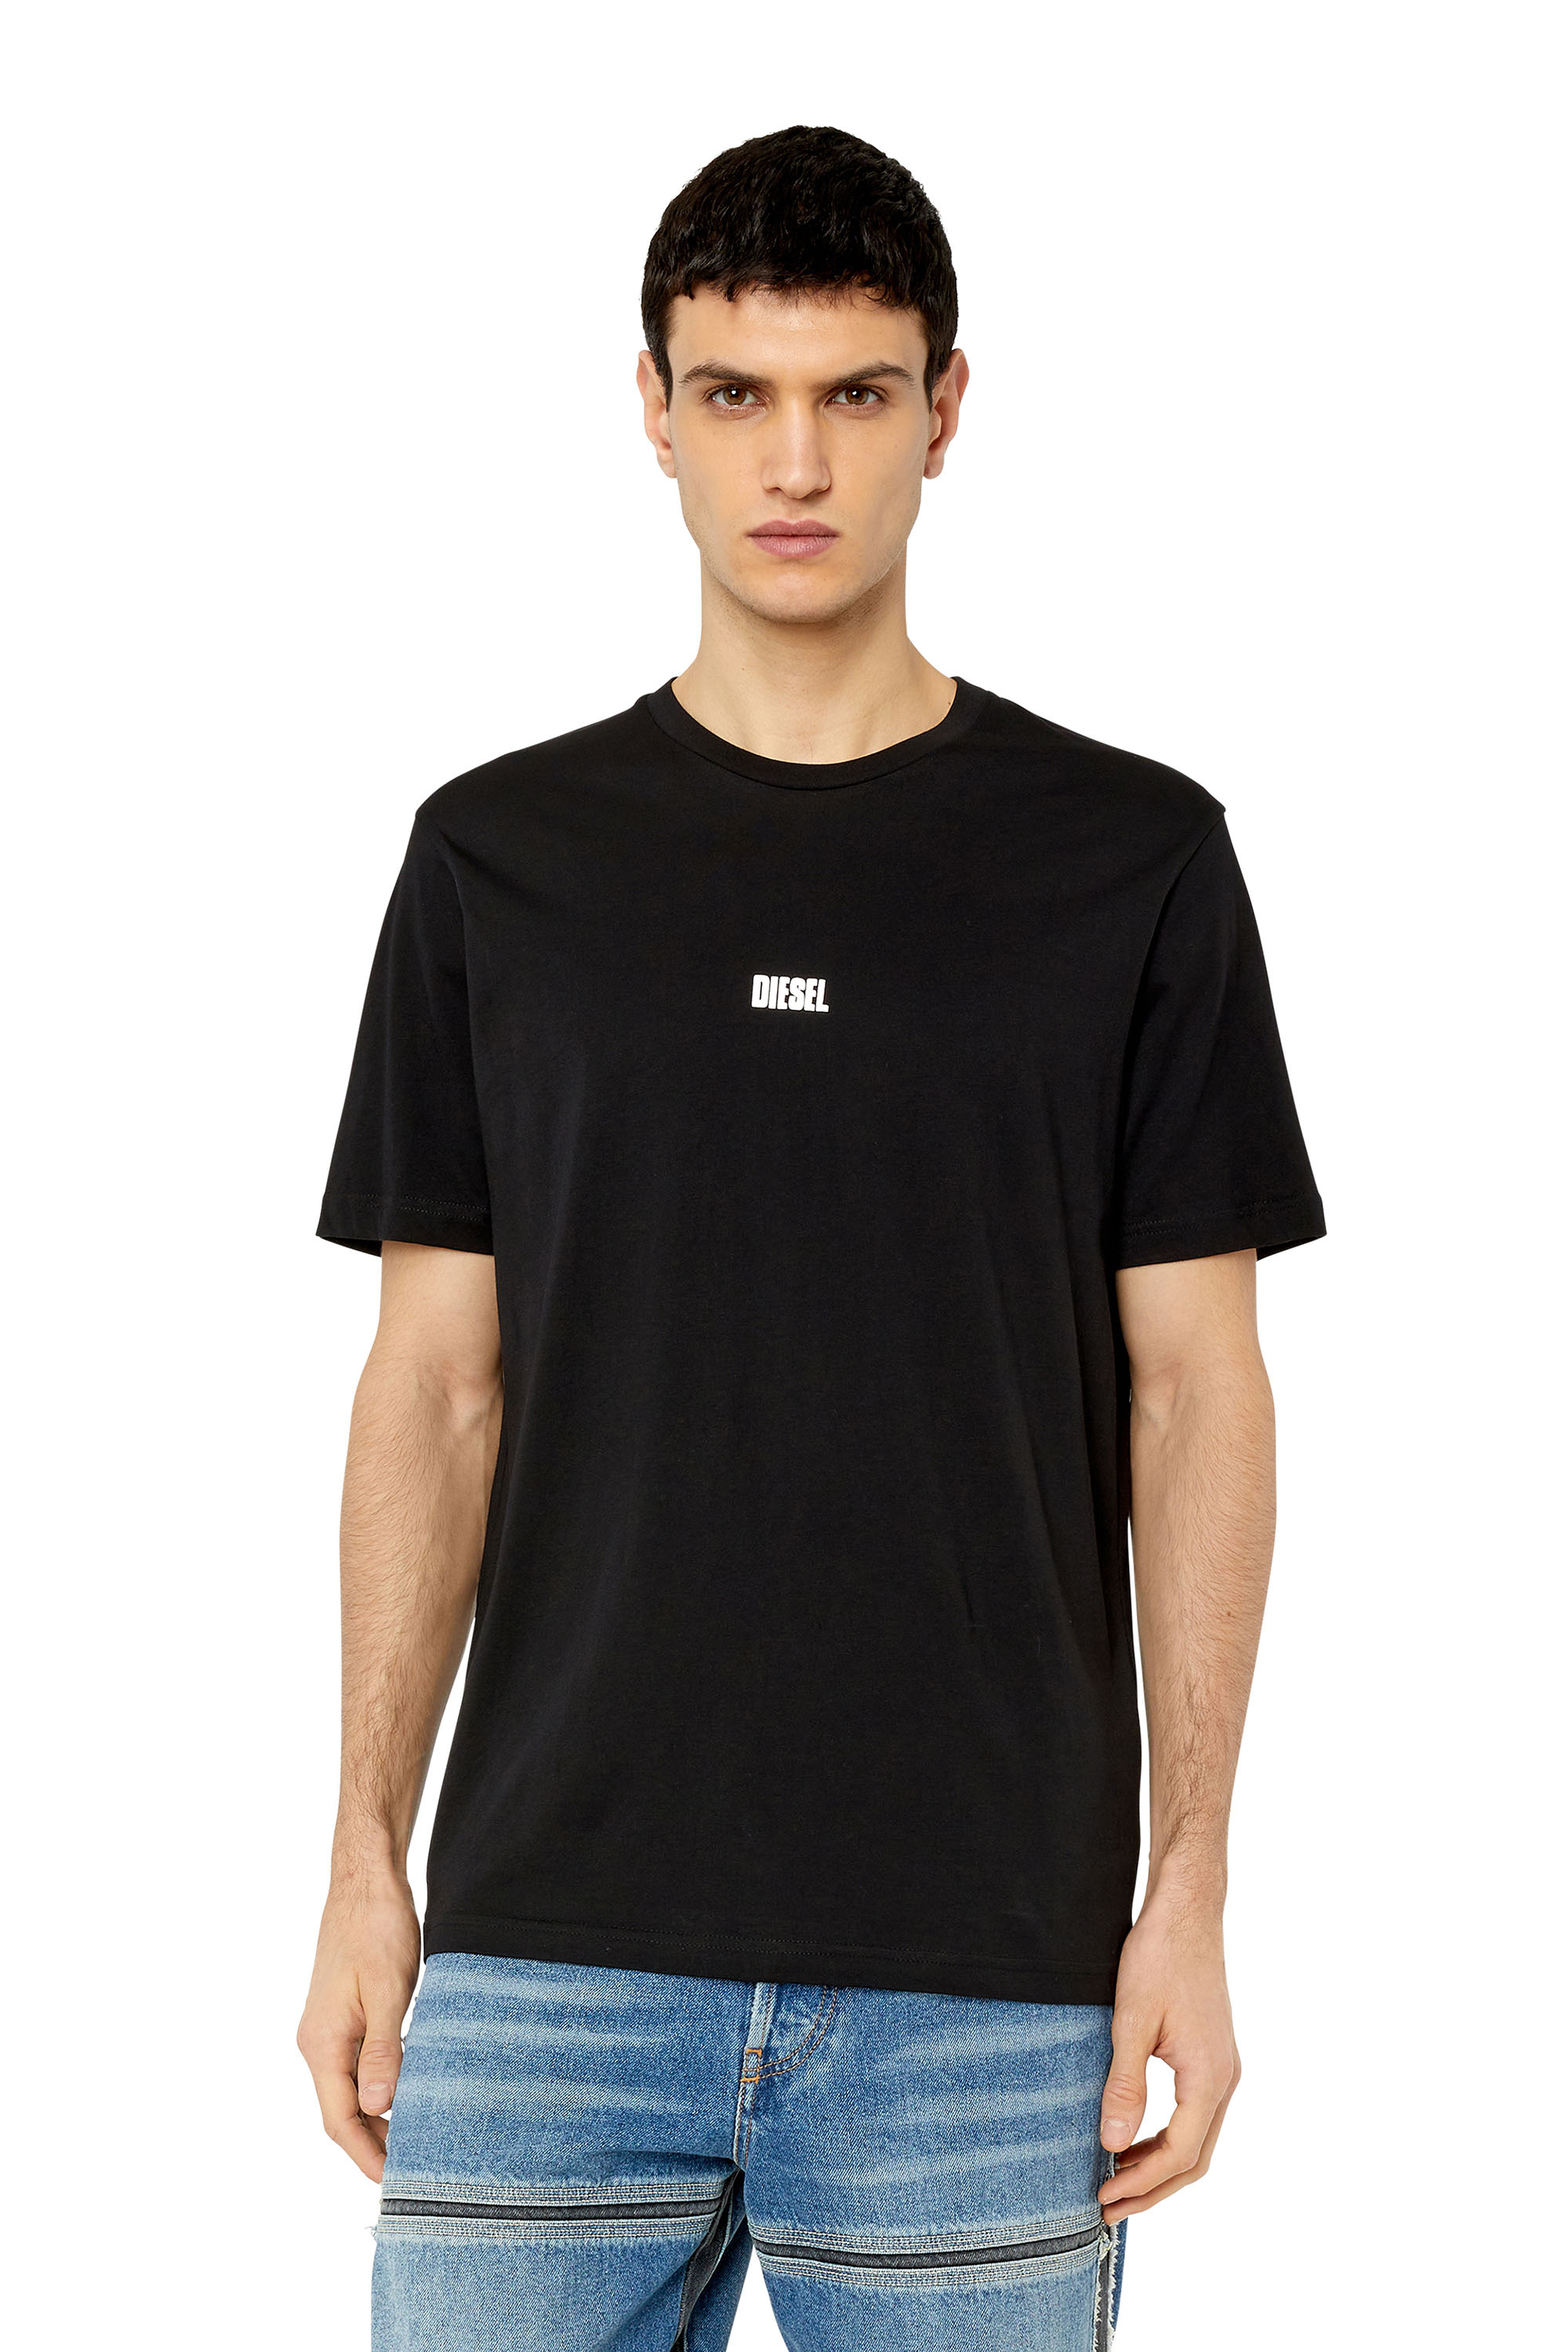 Diesel - T-shirt avec Diesel logo bouffant - T-Shirts - Homme - Noir